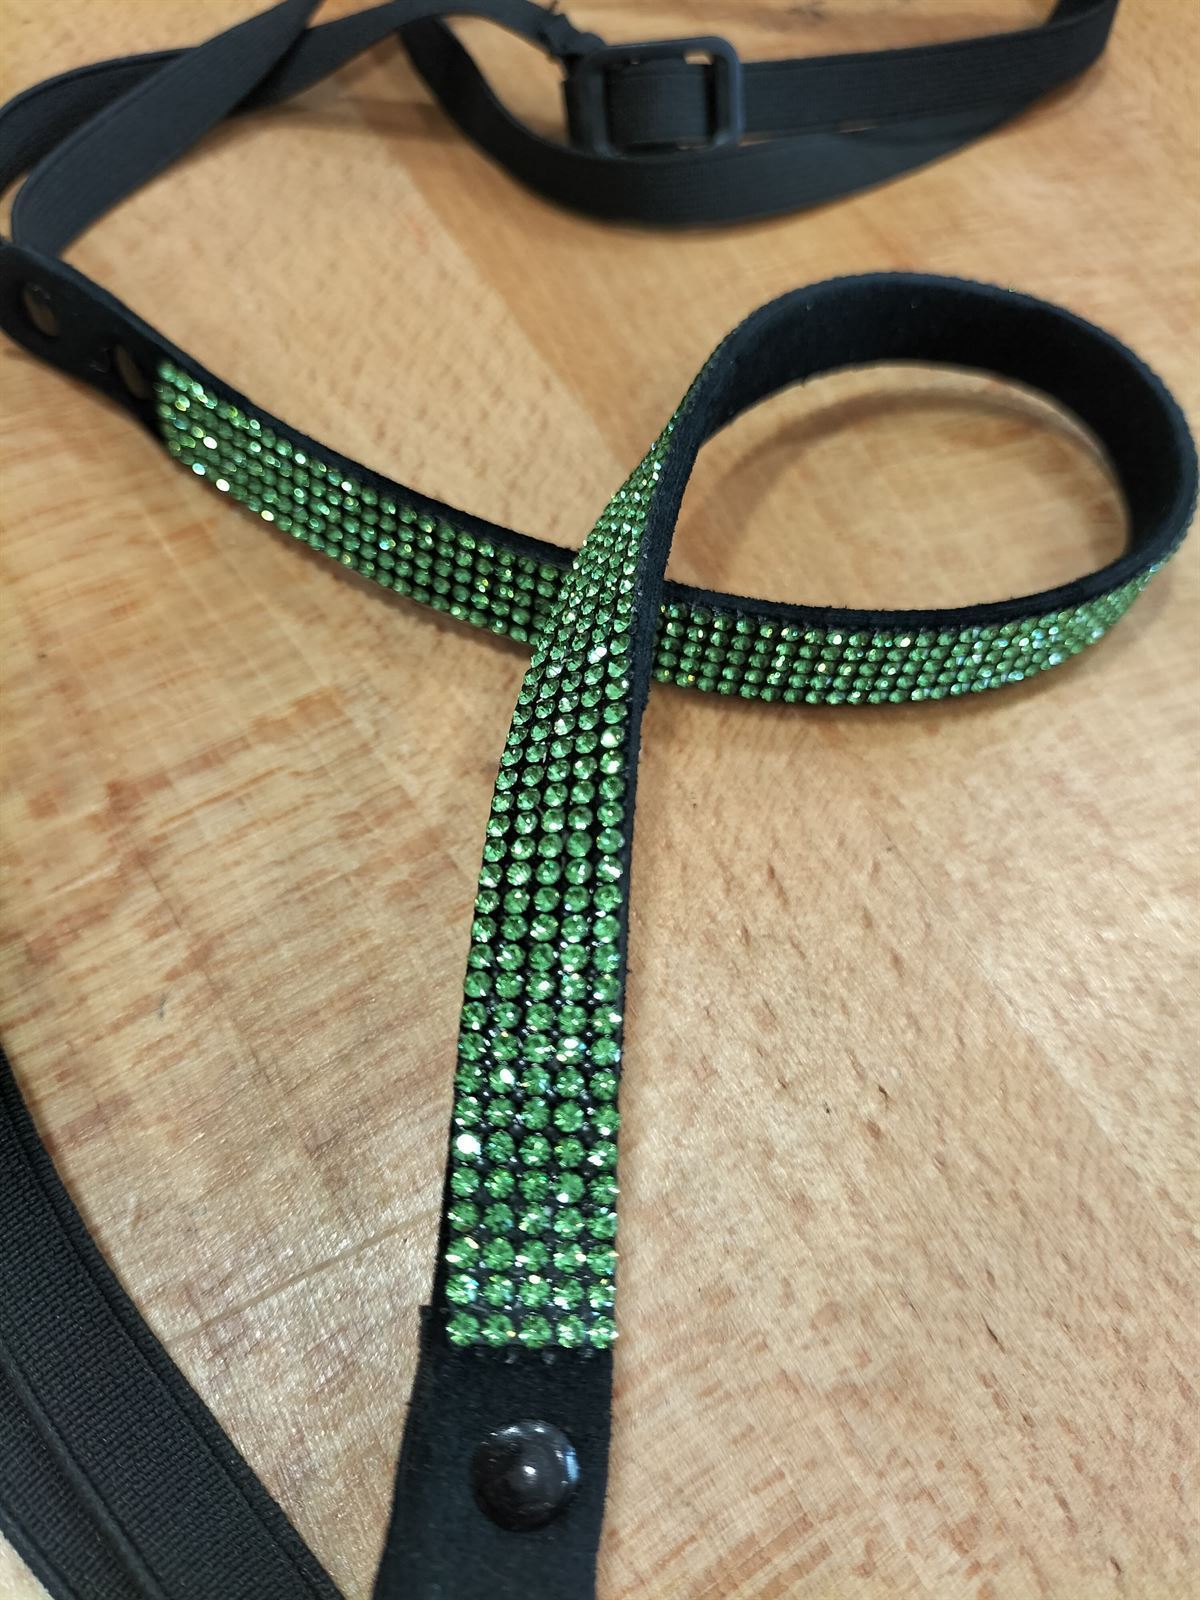 Adorno silla CASTECUS cinta decorativa trasera cristales verdes - Imagen 2